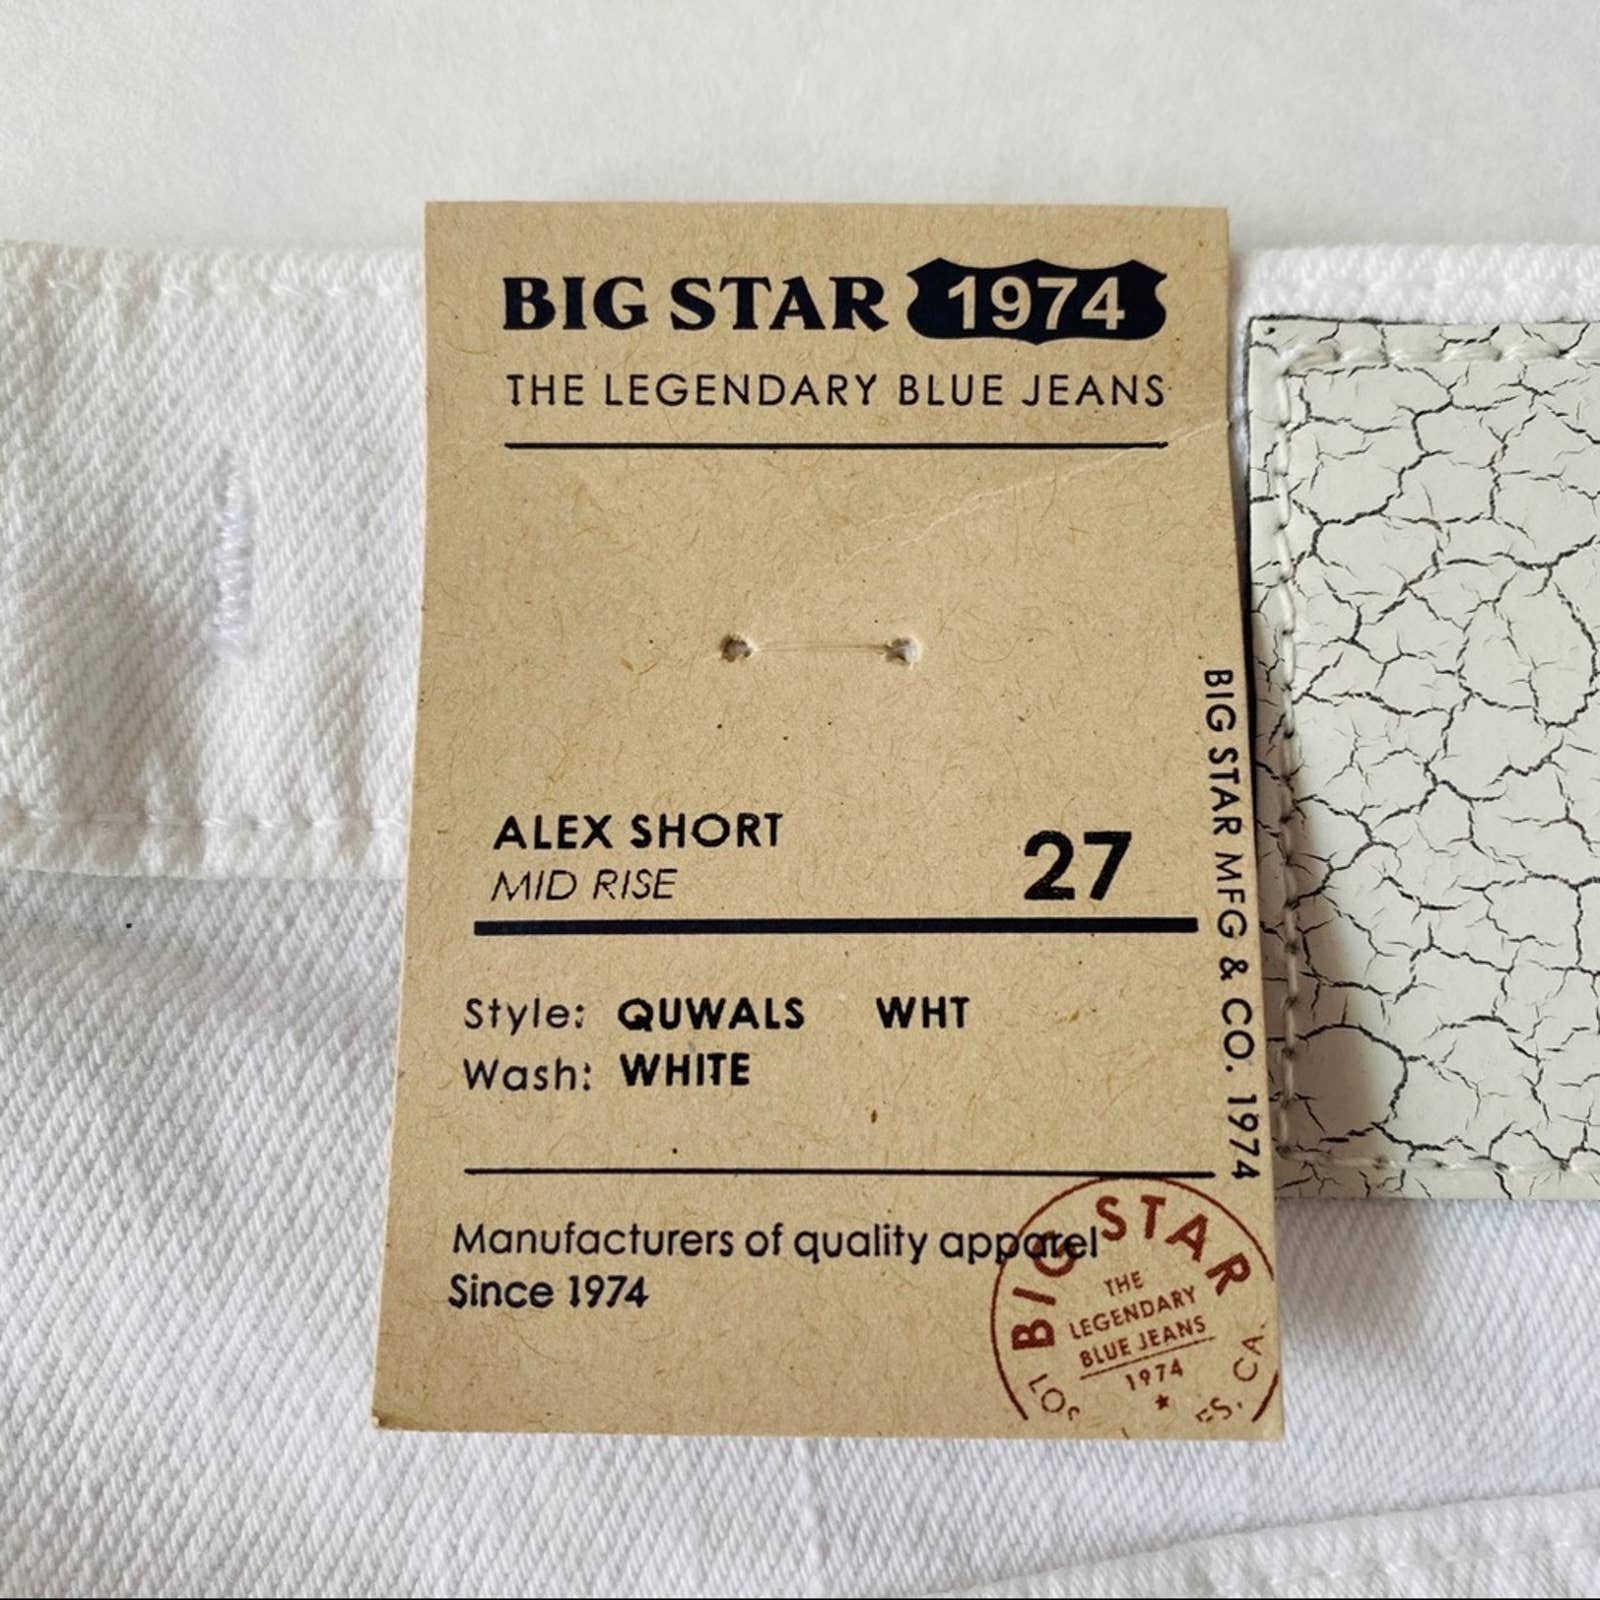 The Best Seller Big Star | Alex Short Mid Rise White Jean Shorts NWT L47FoHyCW best sale